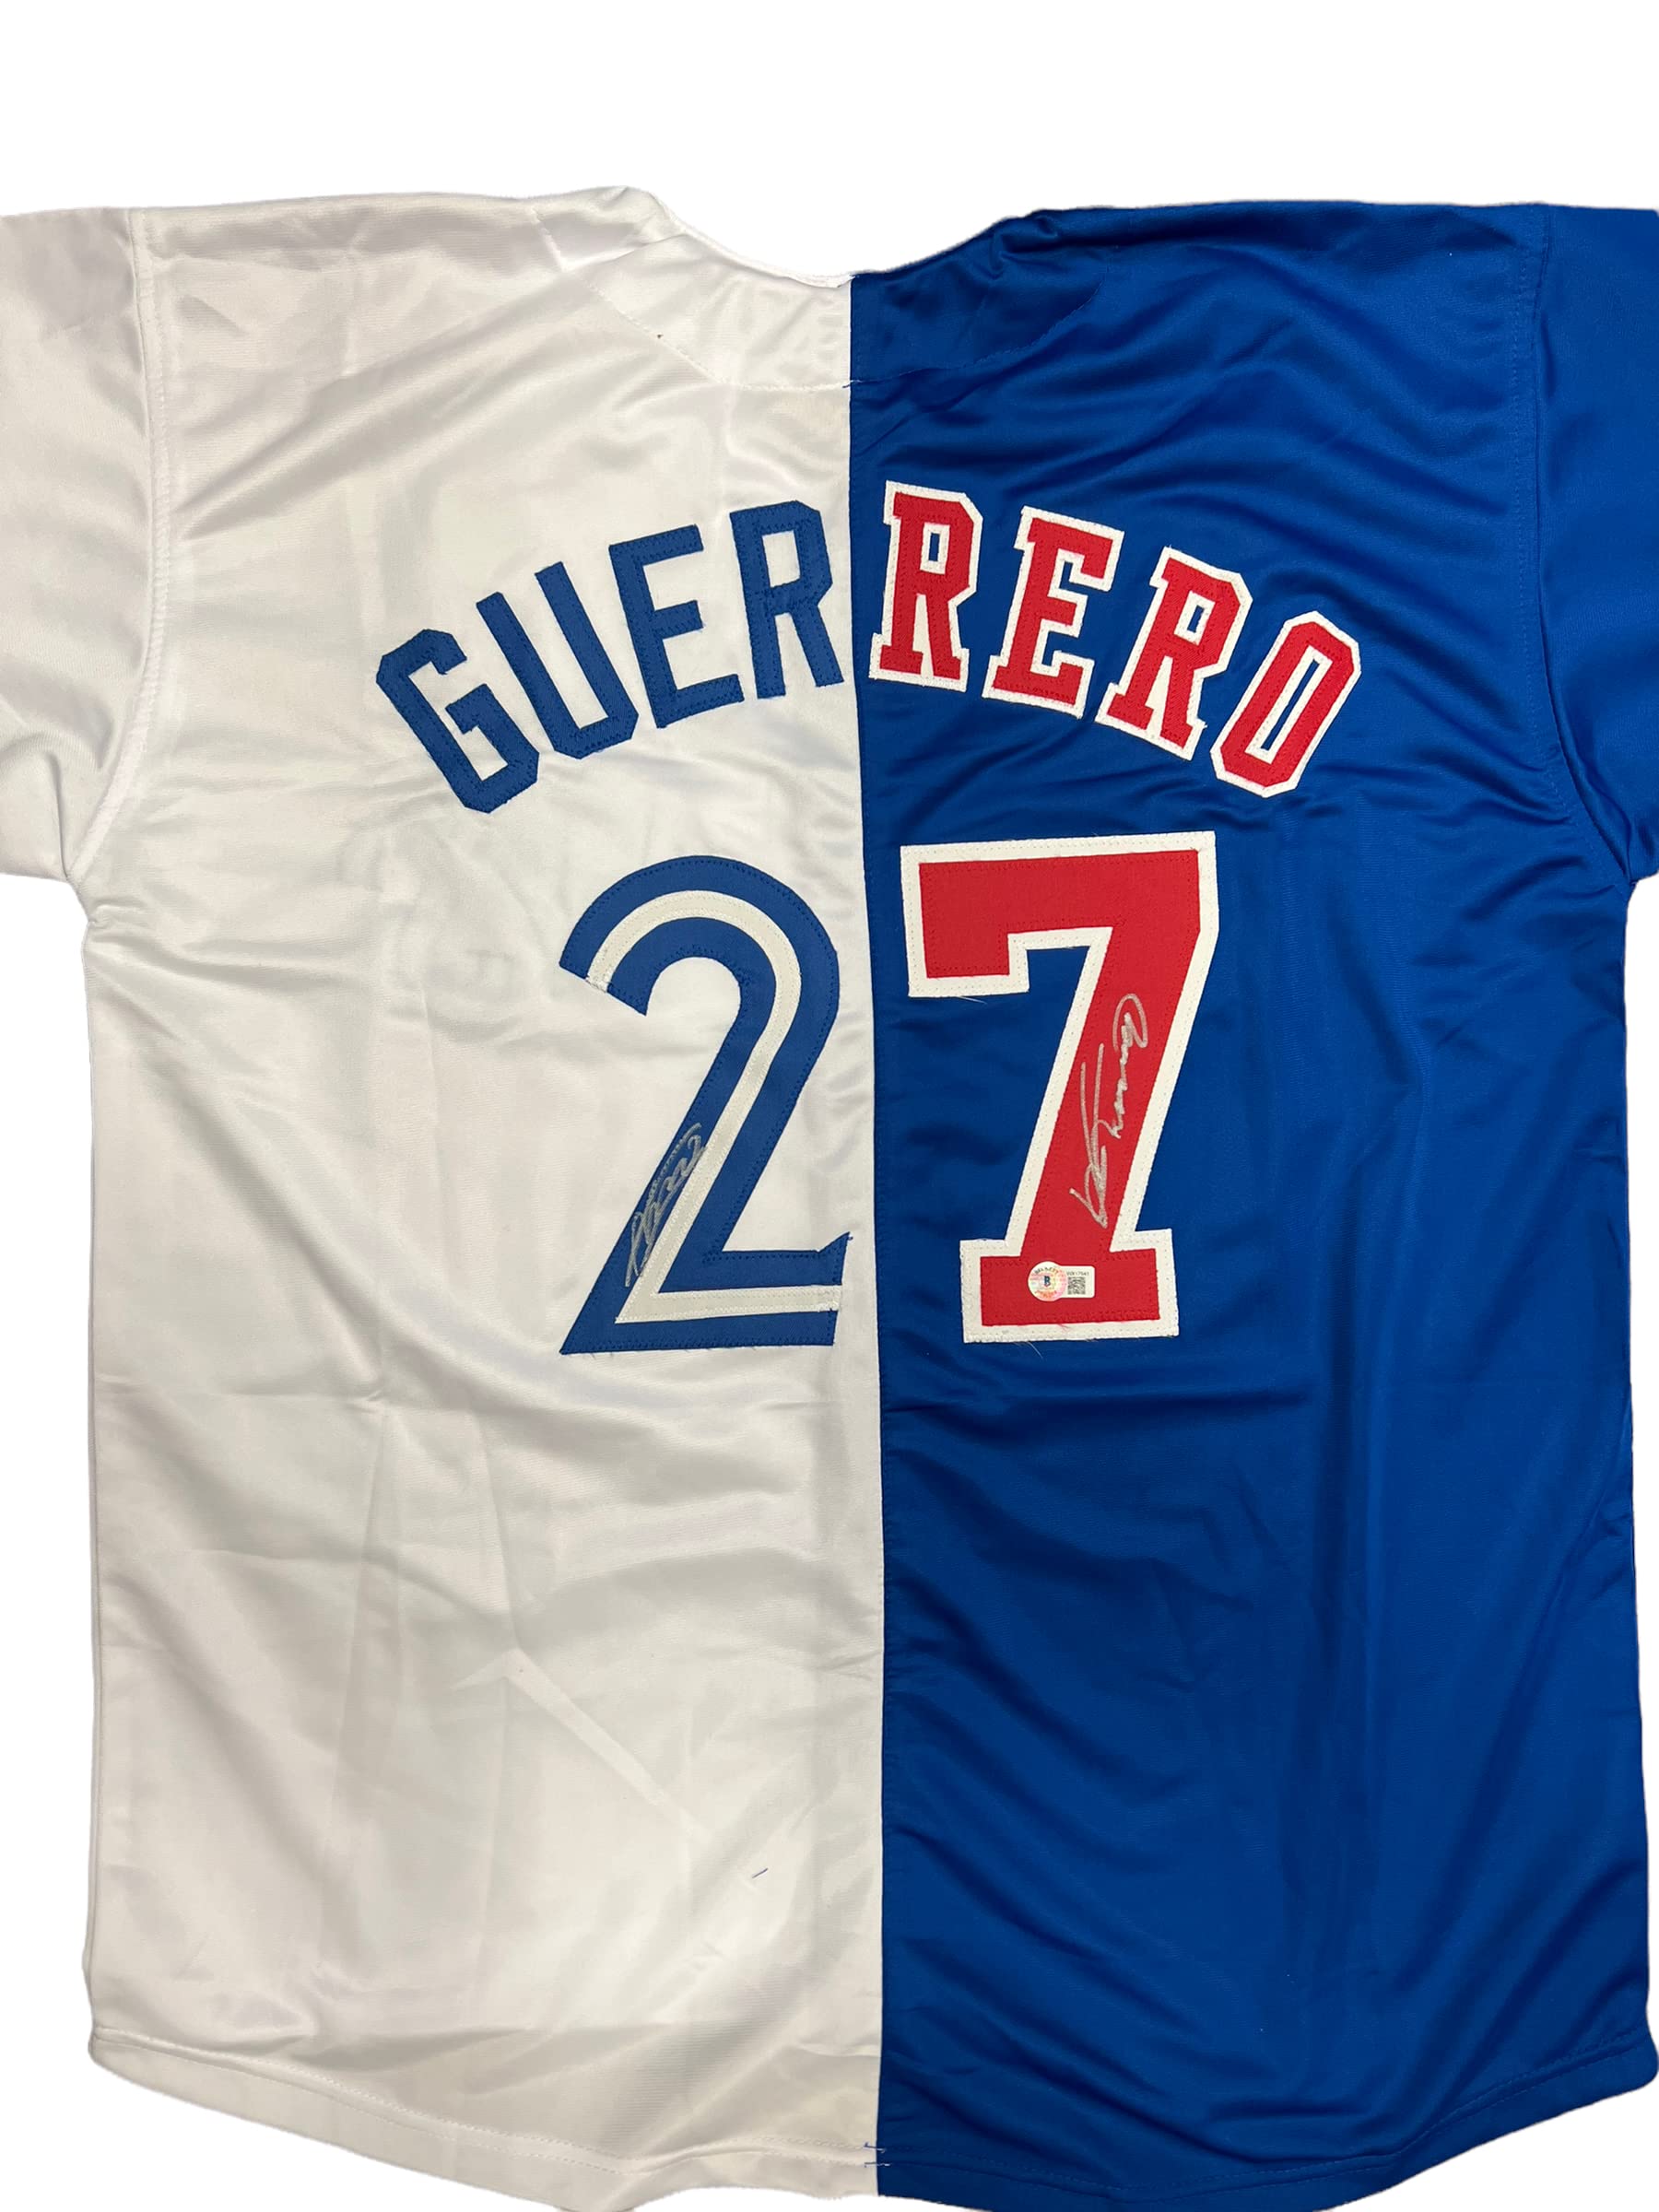 Vladimir Guerrero Jr. Autographed Blue Jays Alternate Blue Jersey